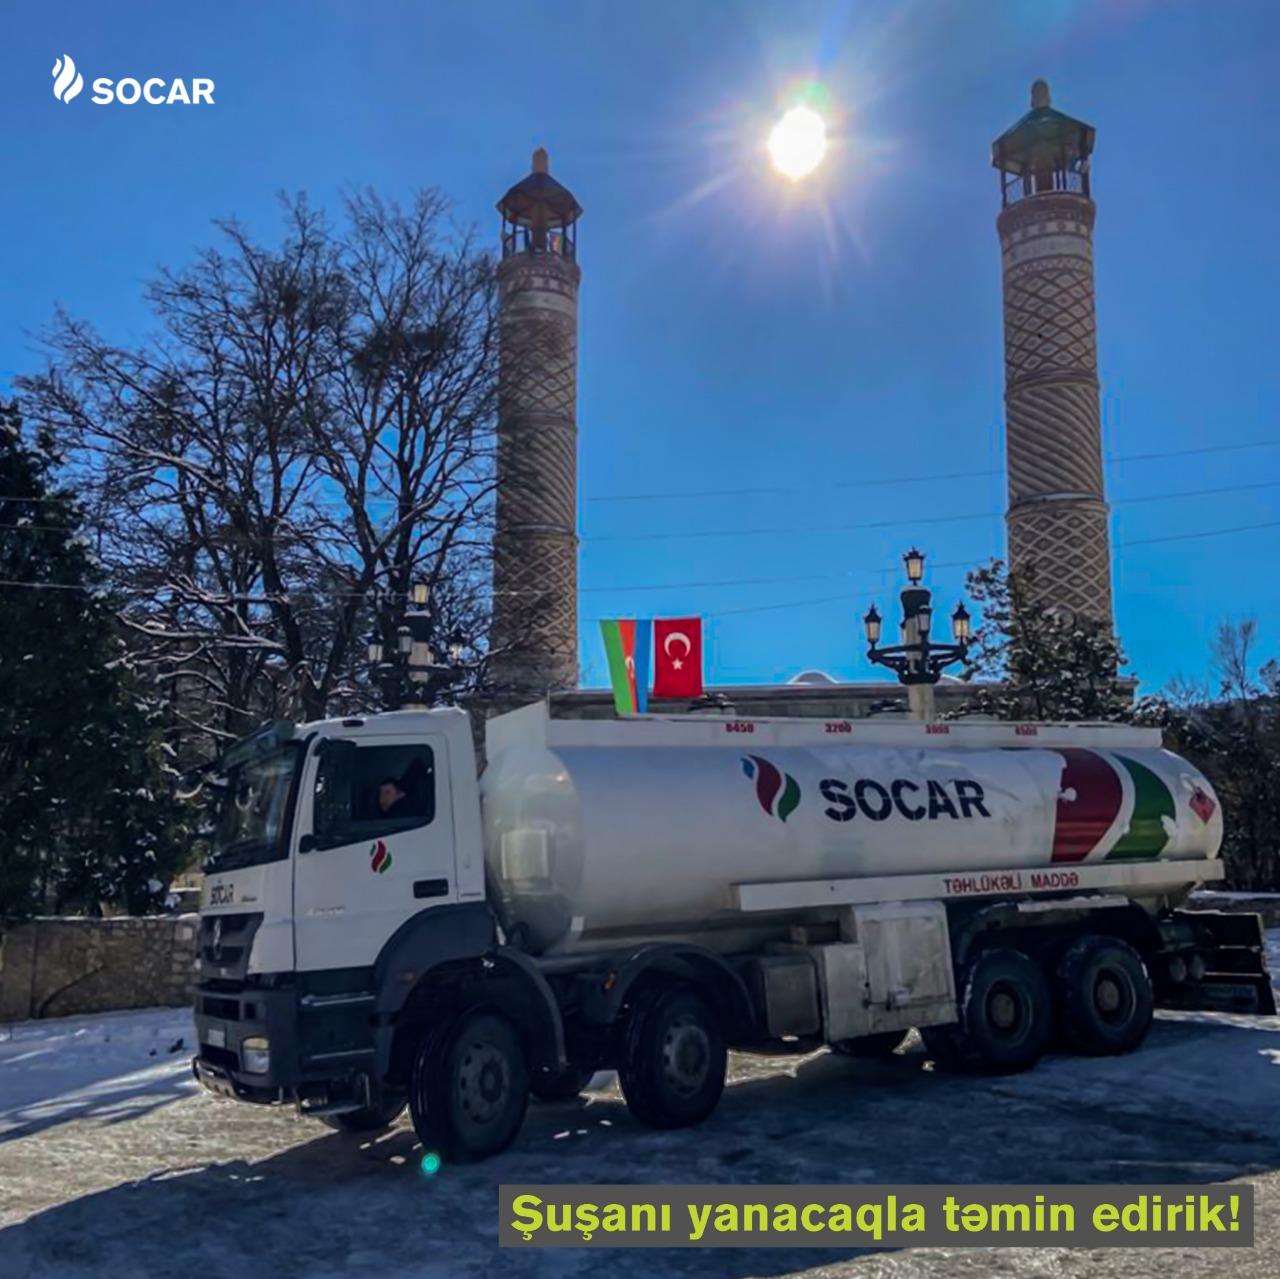 SOCAR to open petrol stations in Karabakh